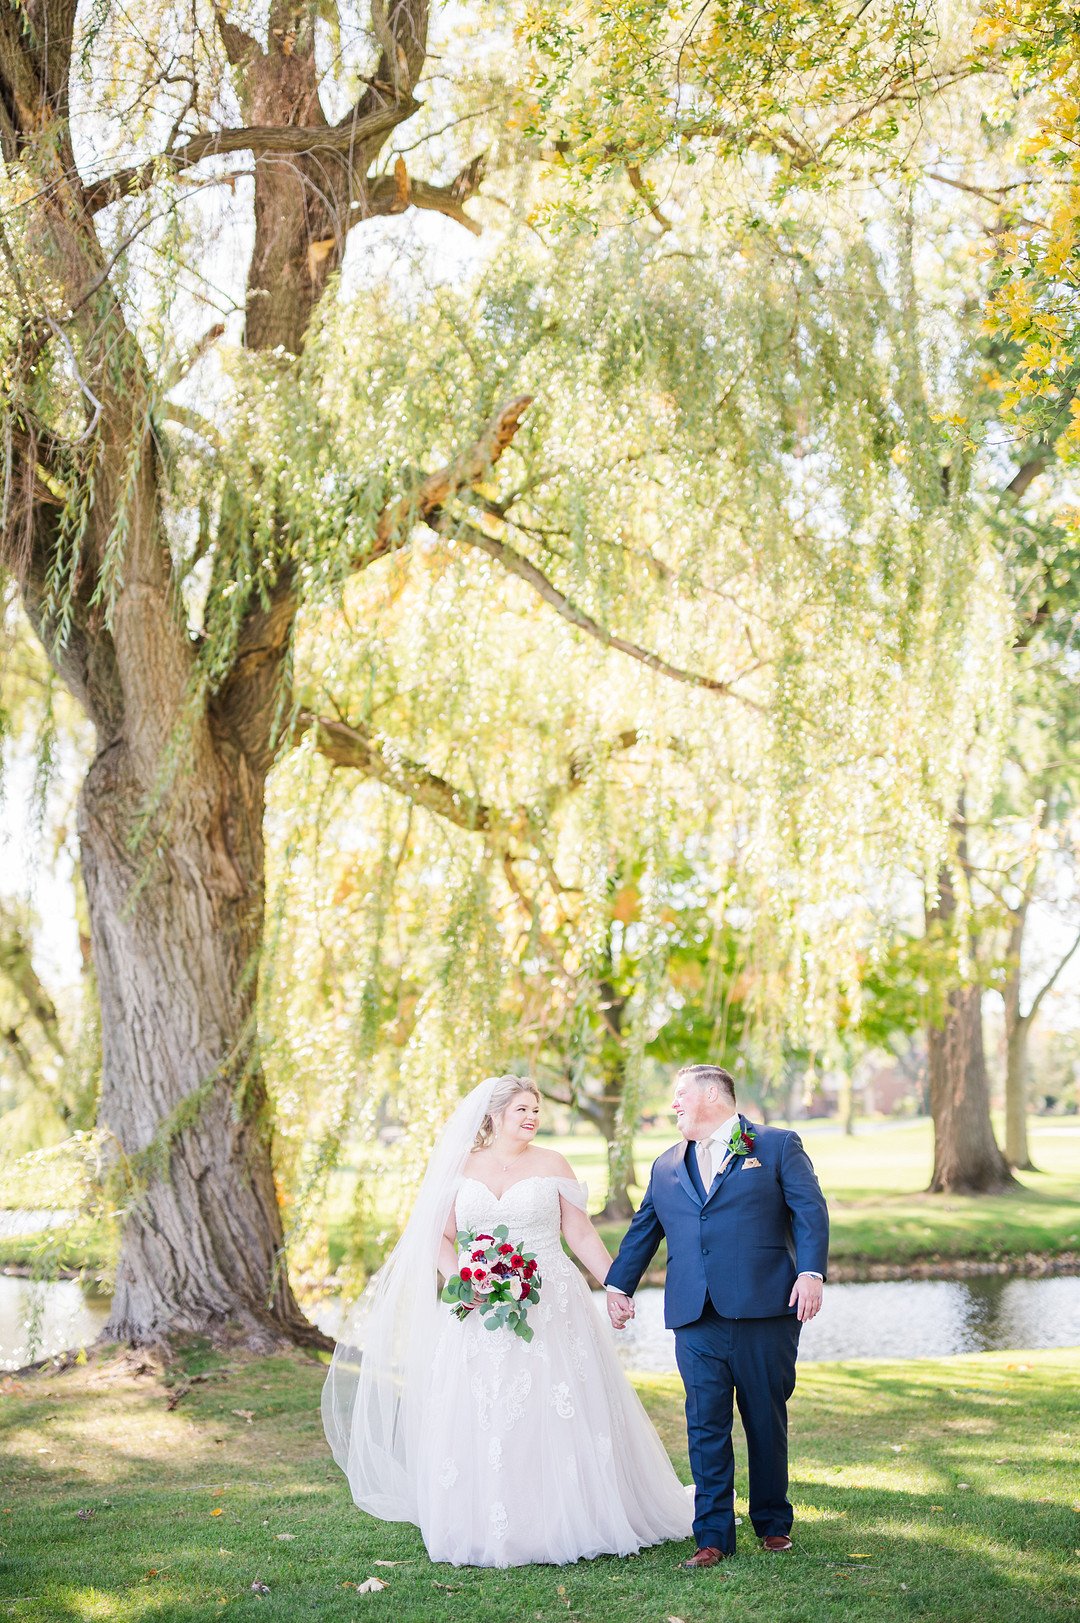 Jackson_Majcher_Winterlyn Photography_Rolling Green Country Club Autumn Wedding-39_low.jpg